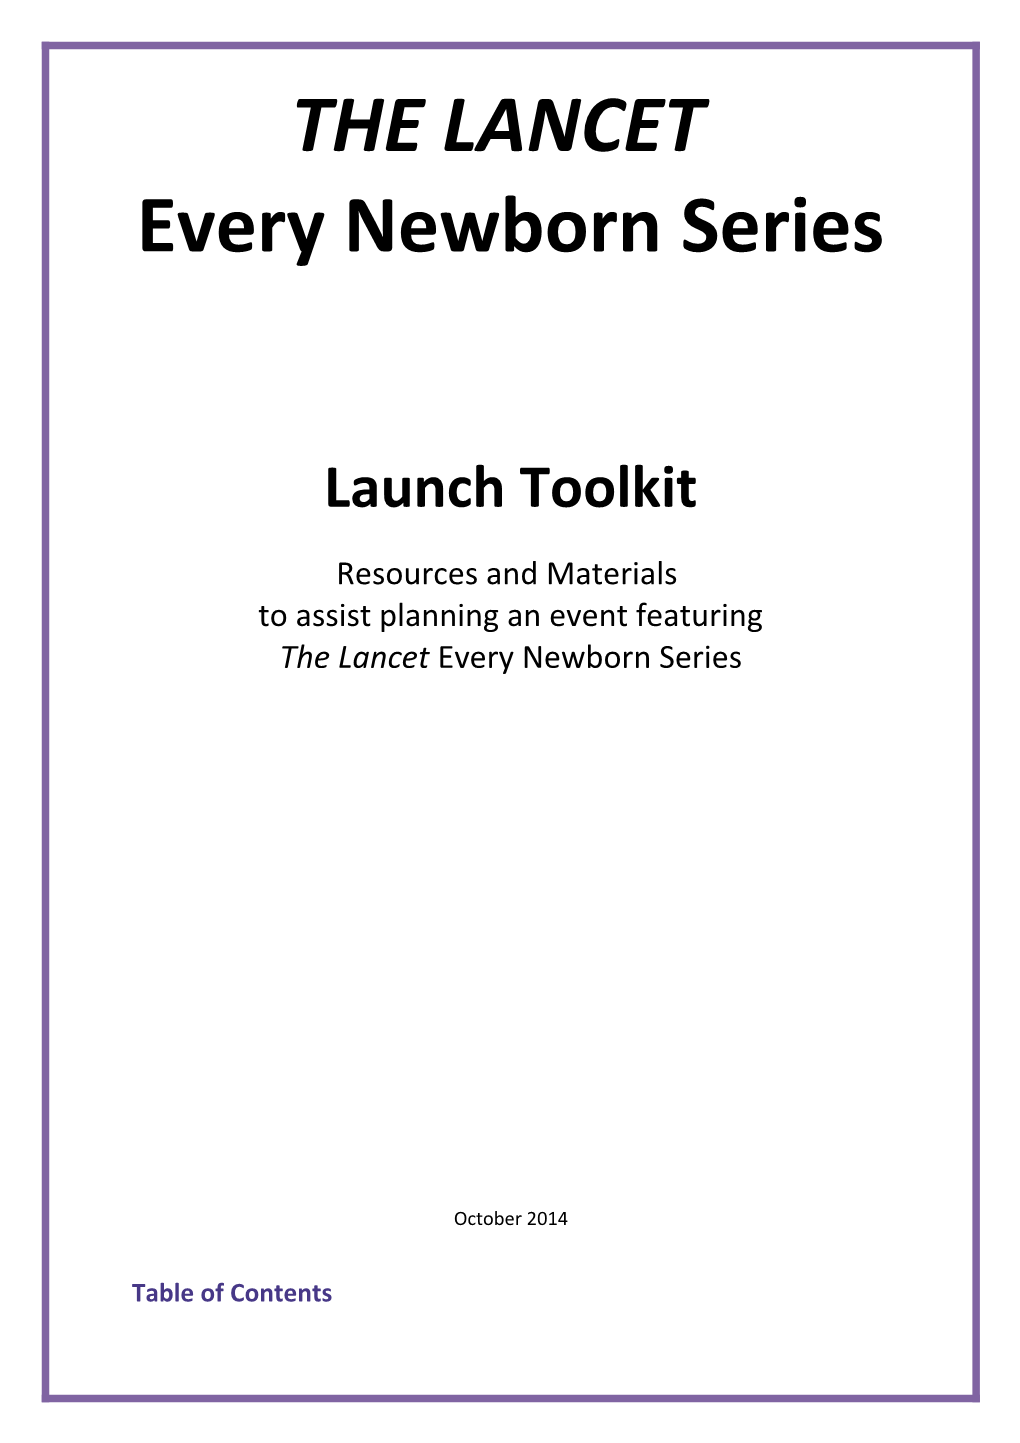 THE LANCET Every Newborn Series